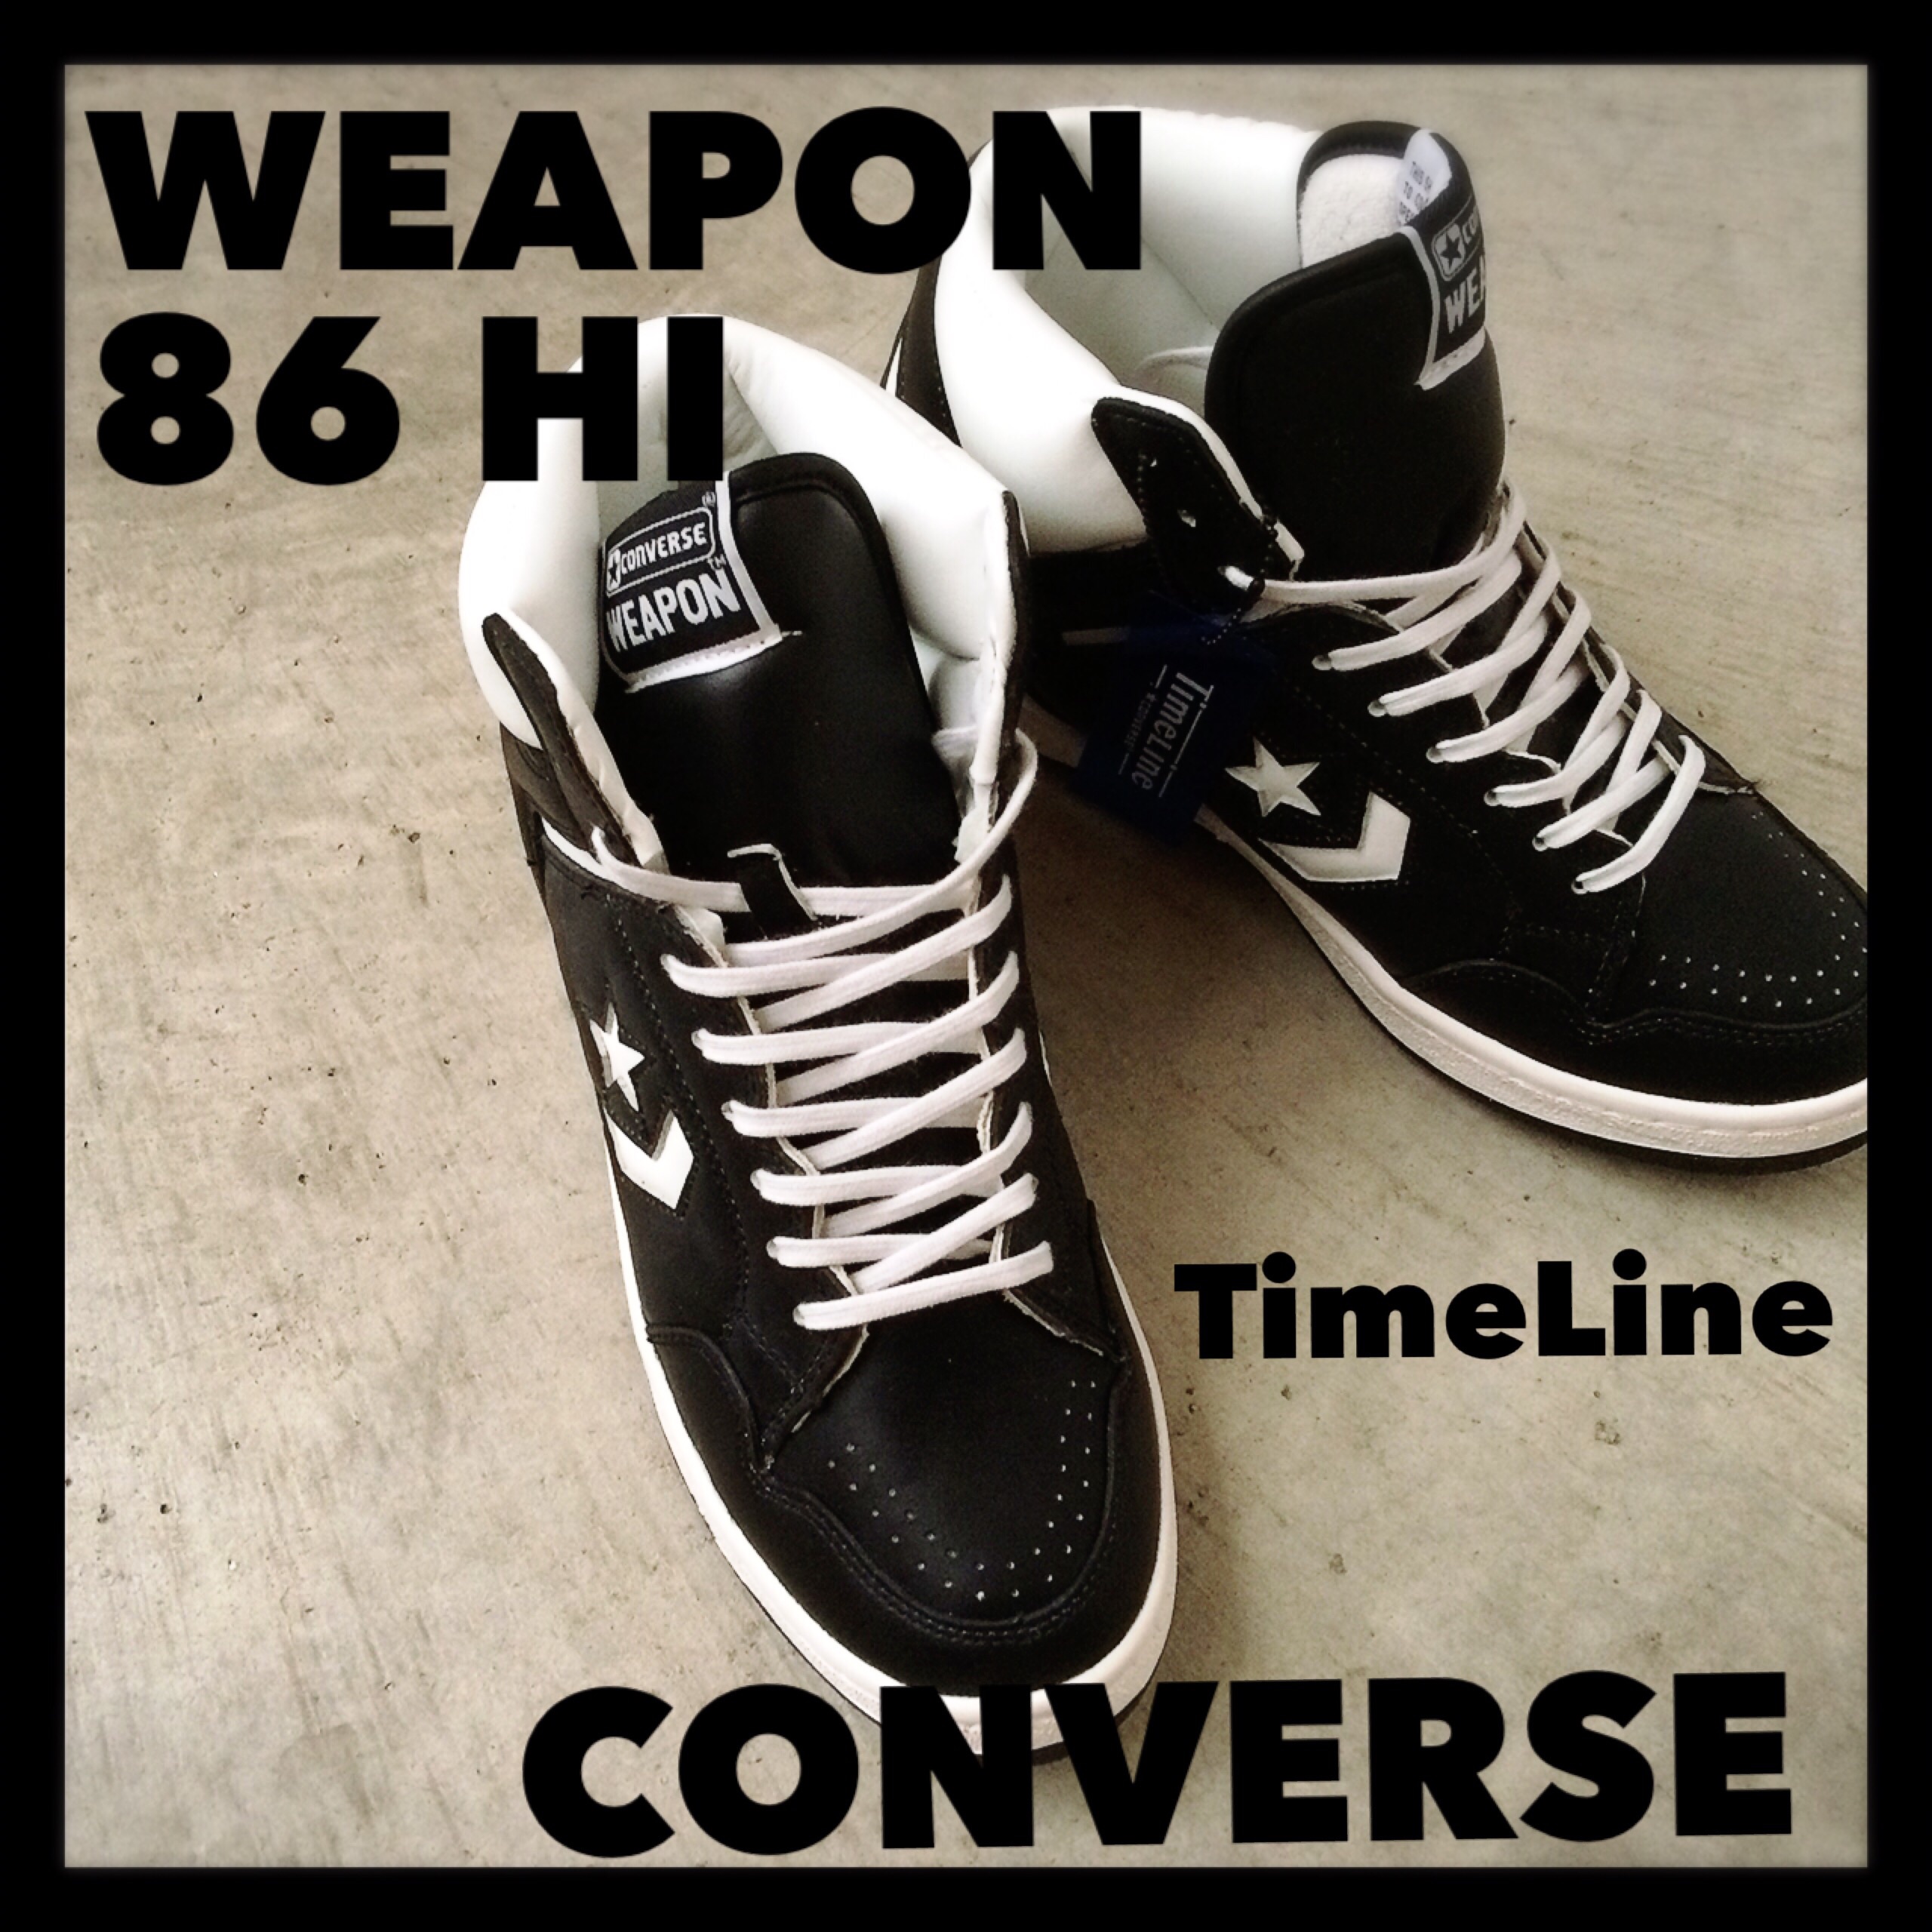 converse all star weapon 86 hi